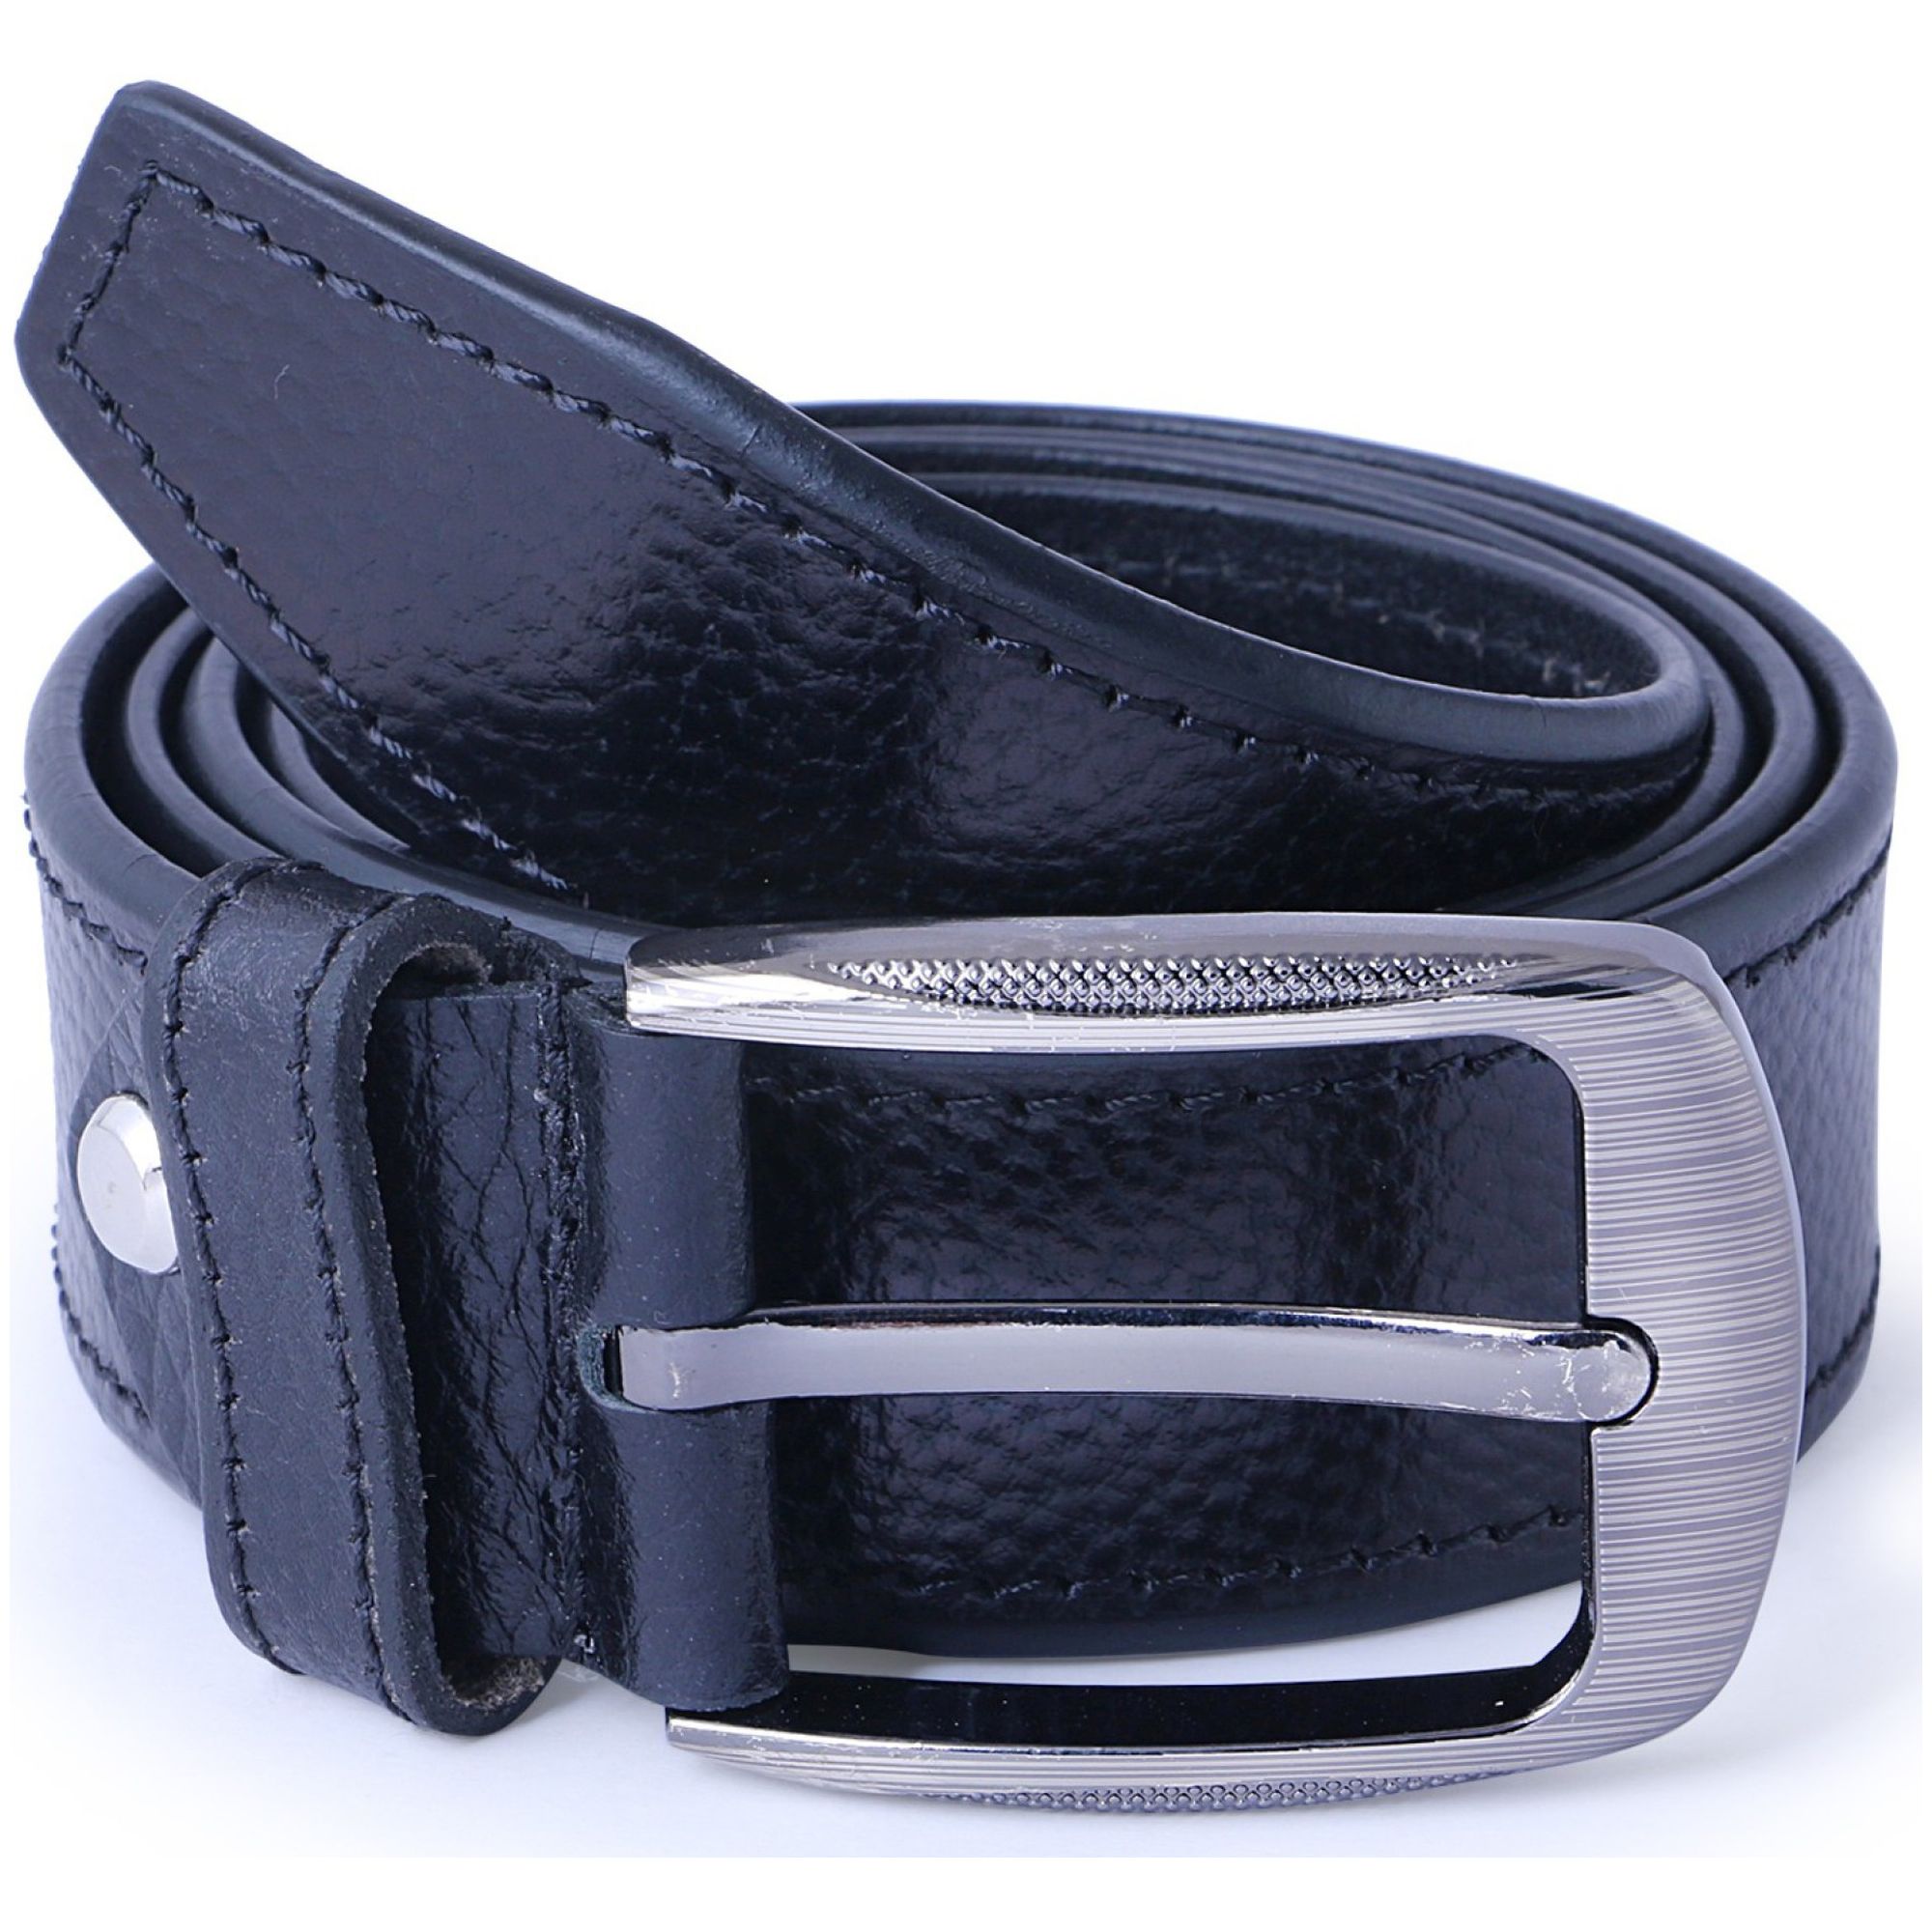 Debonair International Men's Genuine Leather Belt with 5 Punch Holes, DI934247, Black